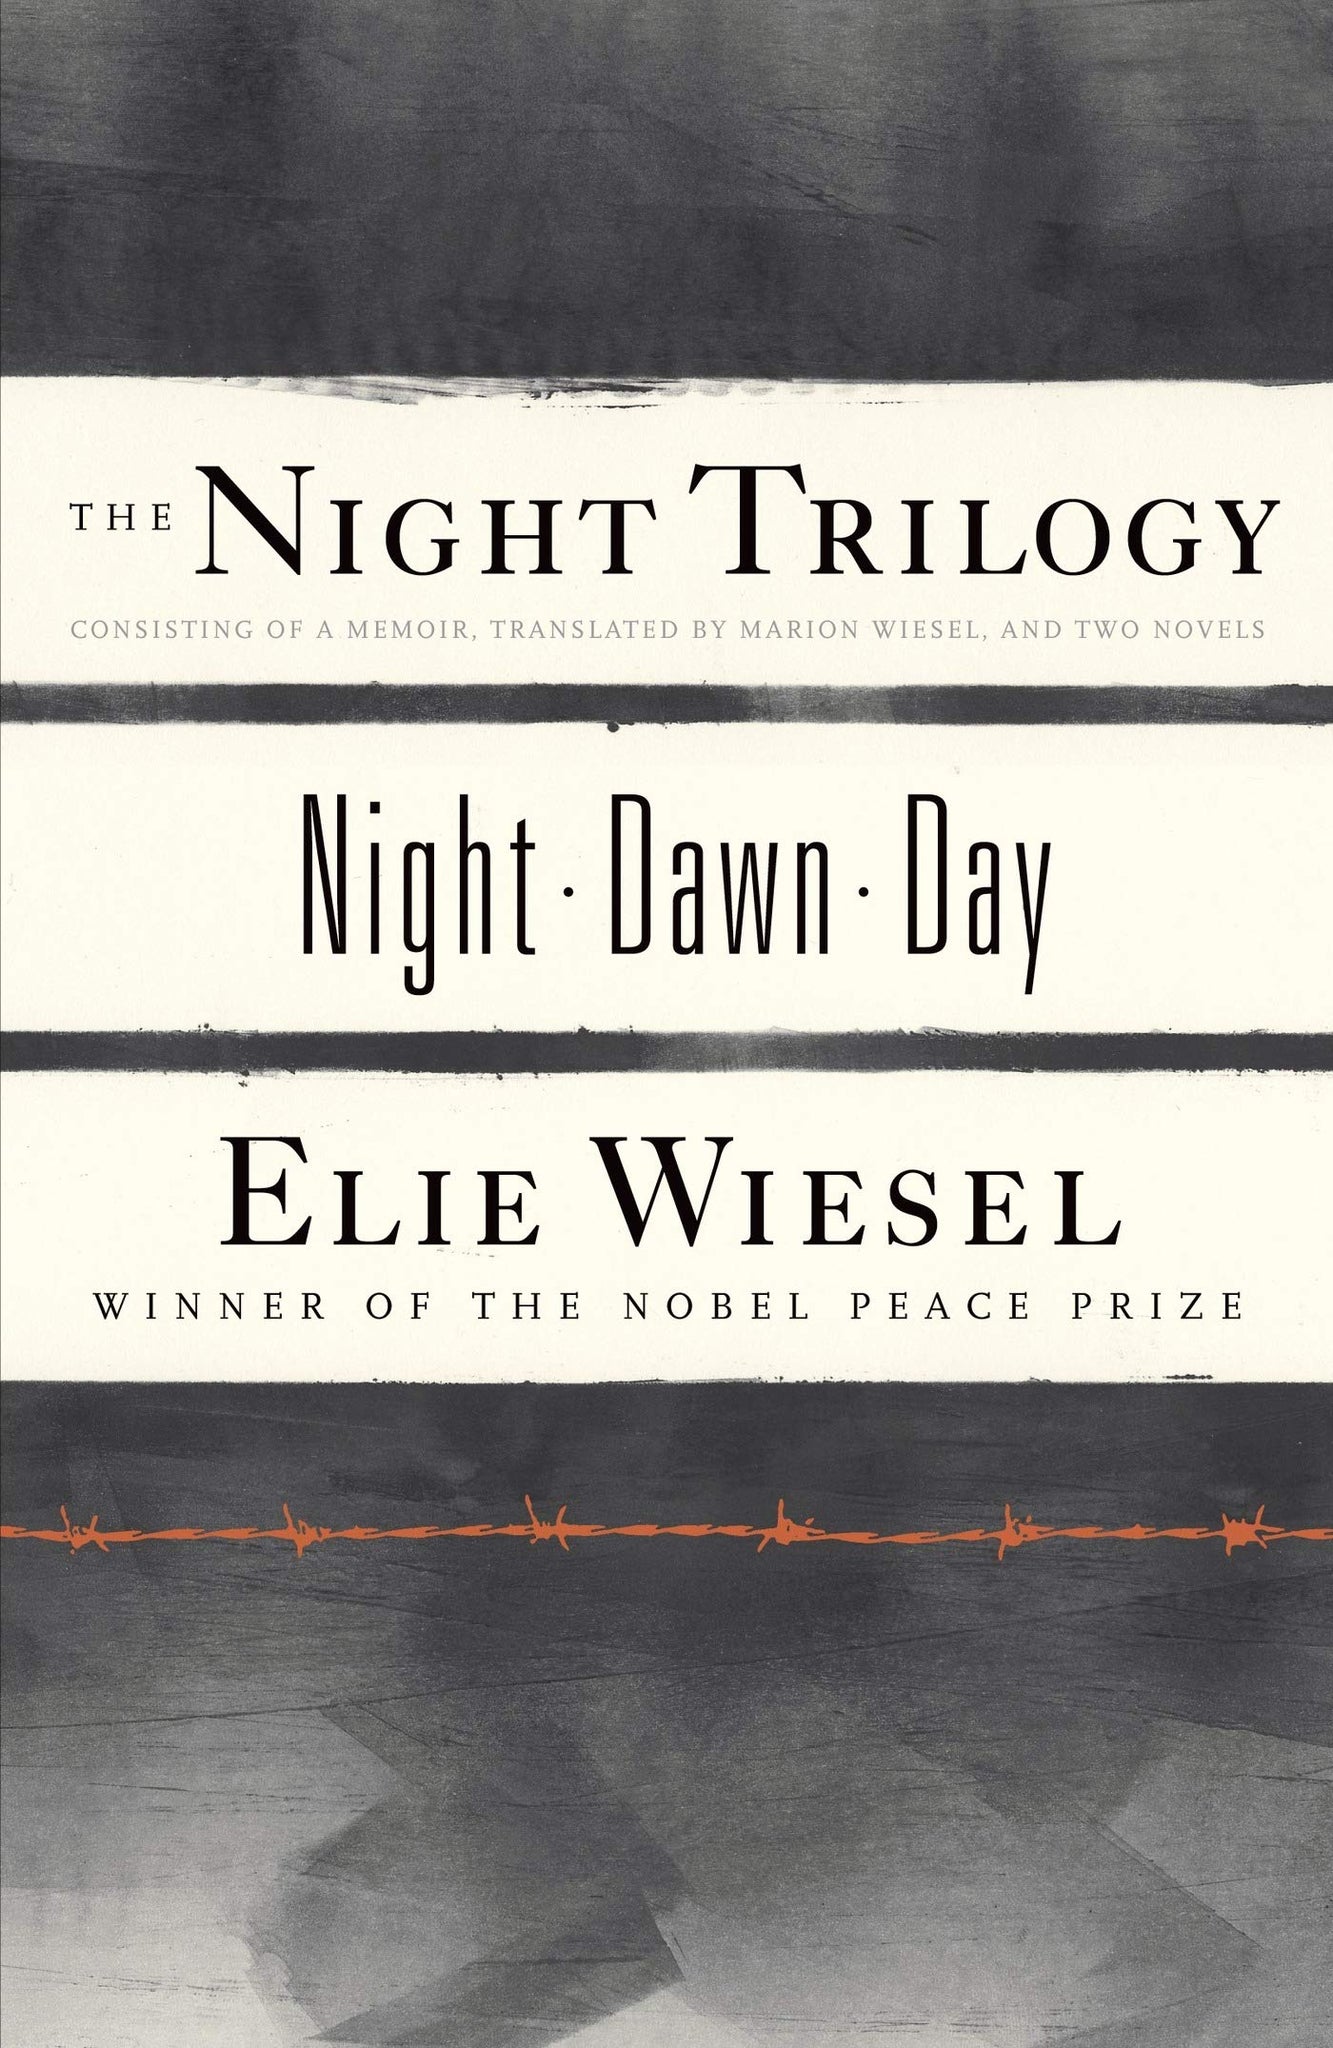 Night Trilogy